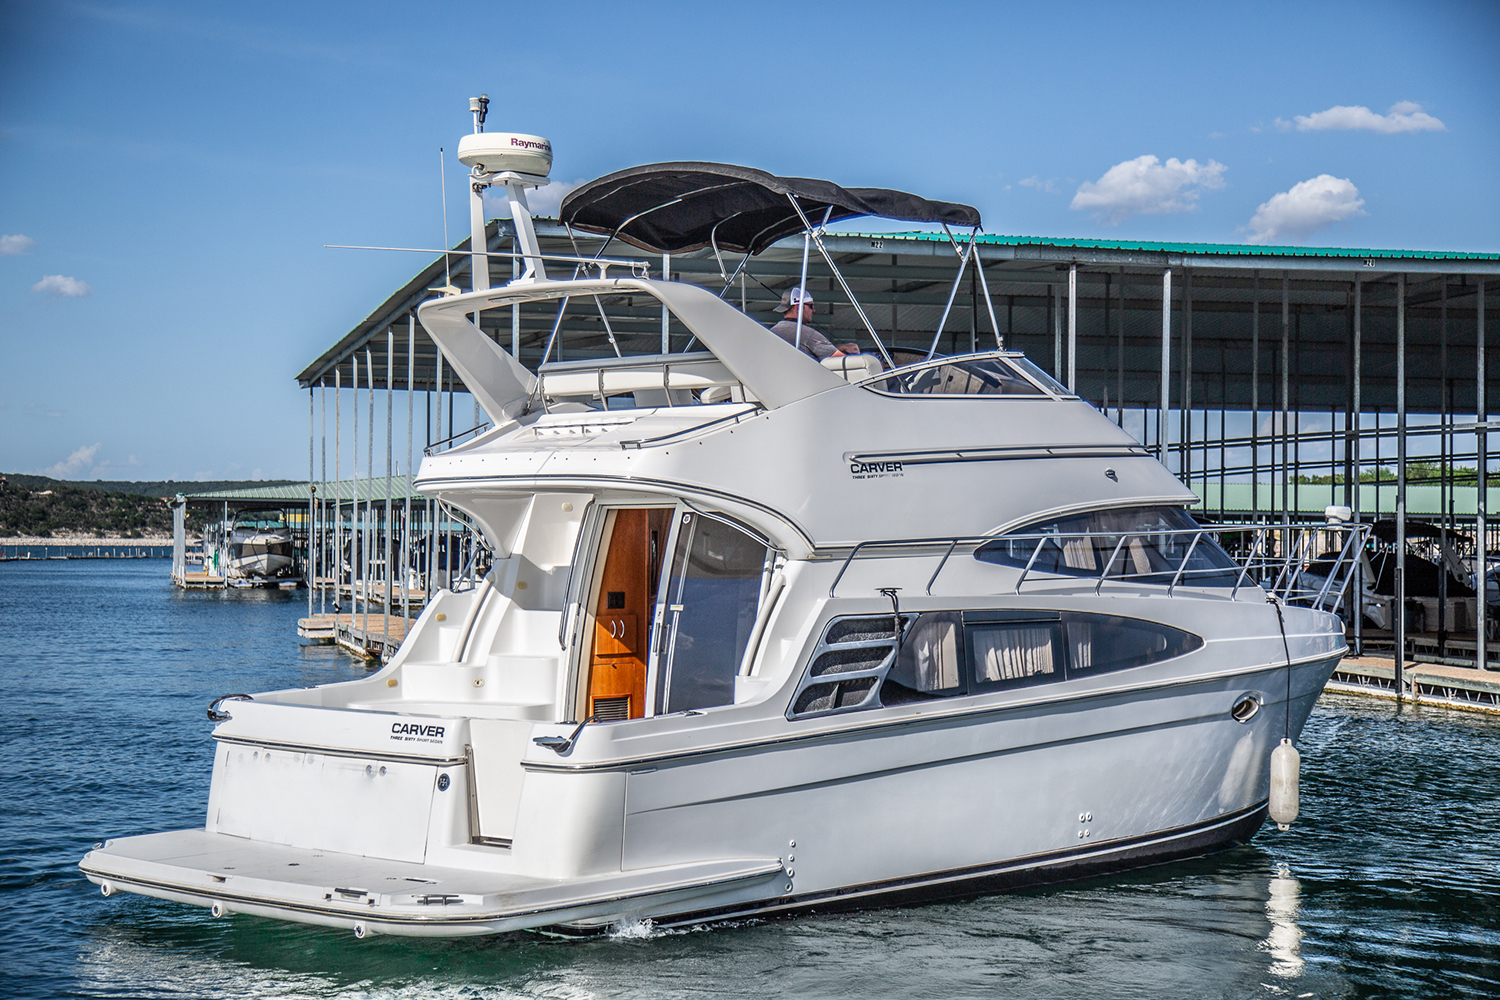 Lake Travis Yacht Rental's Carver 360 Sport Sedan  “Moonraker”  pulling out of the slip.